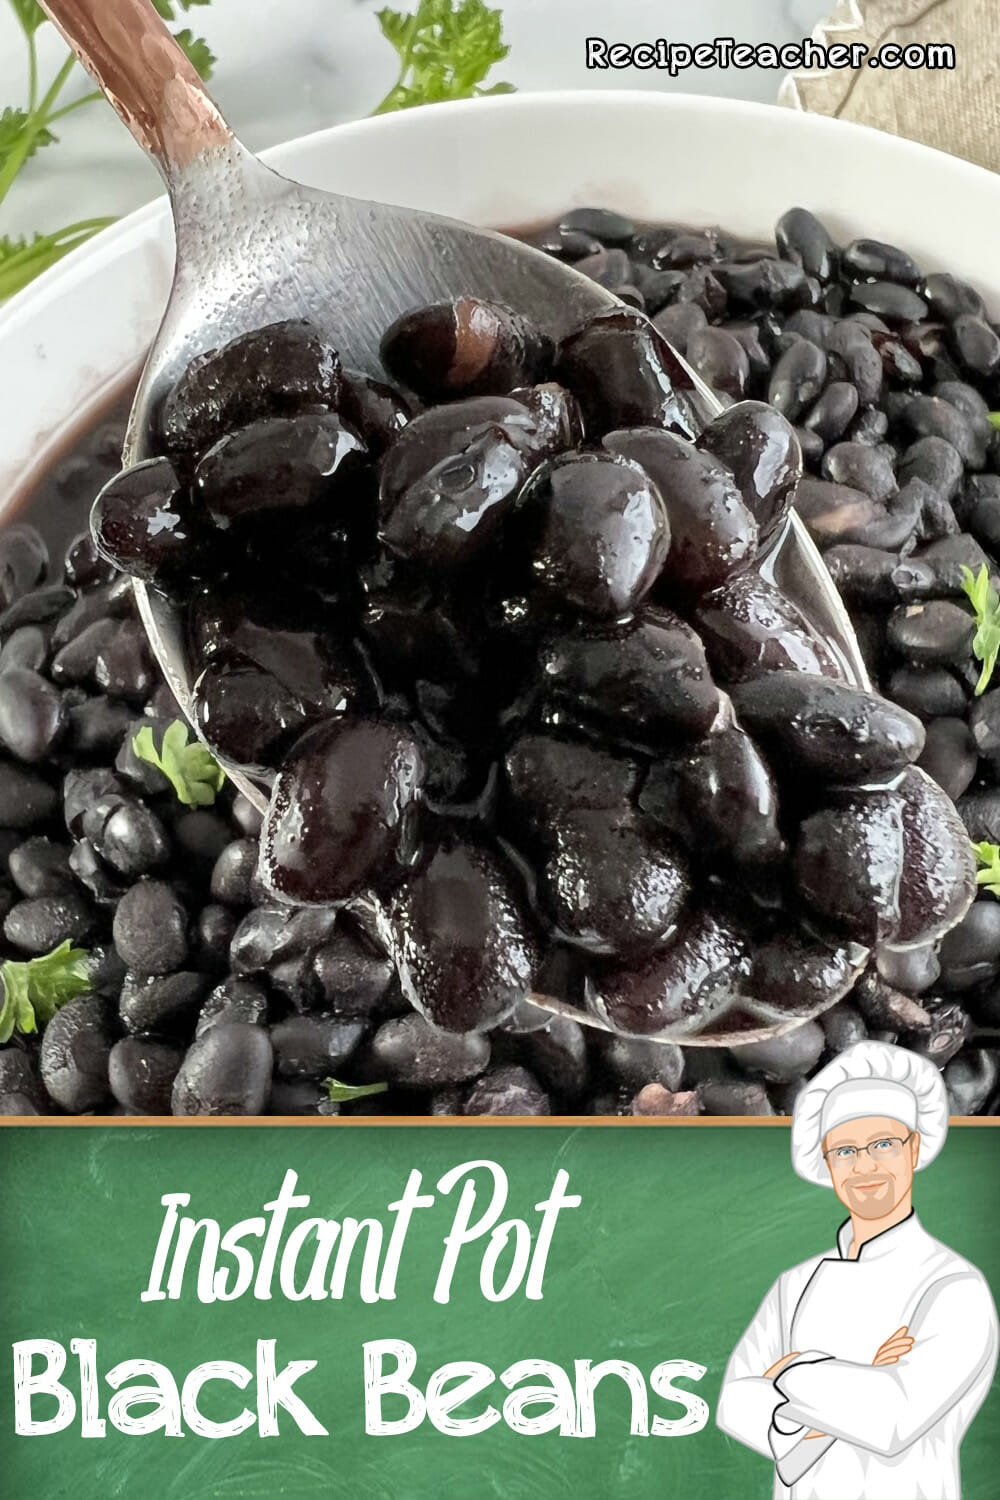 Recipe for Instant Pot (pressure cooker) black beans.